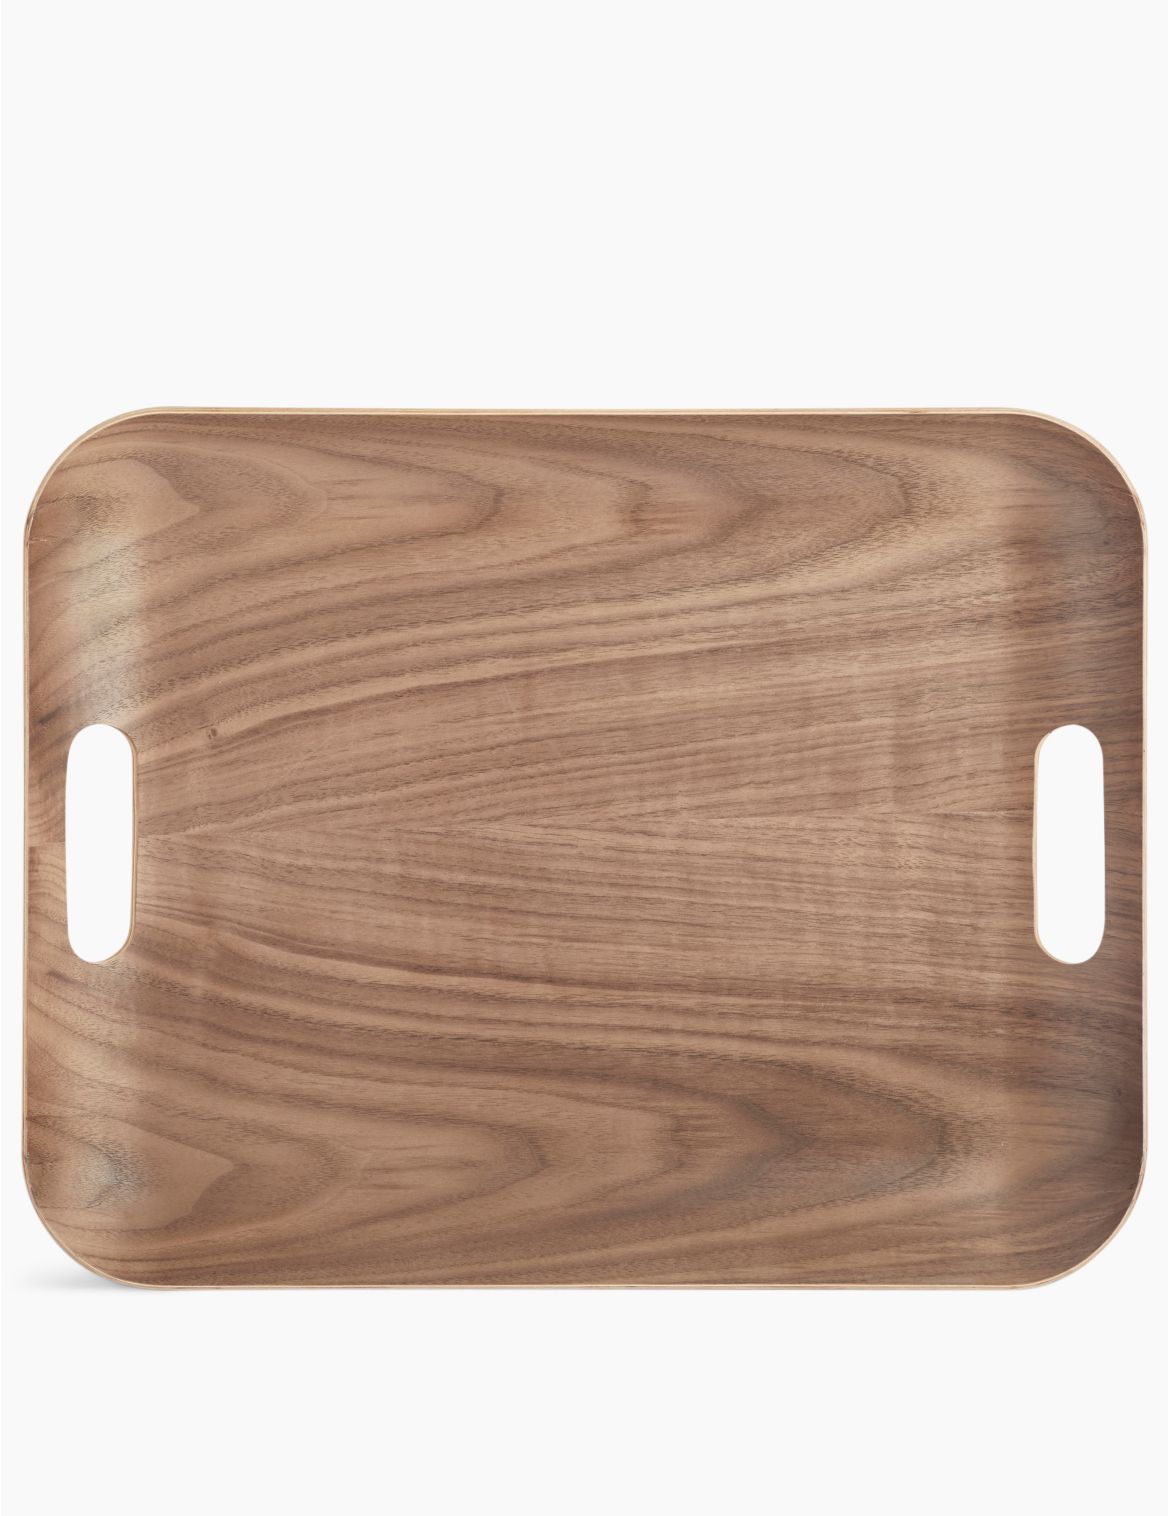 Walnut Wooden Tray brown